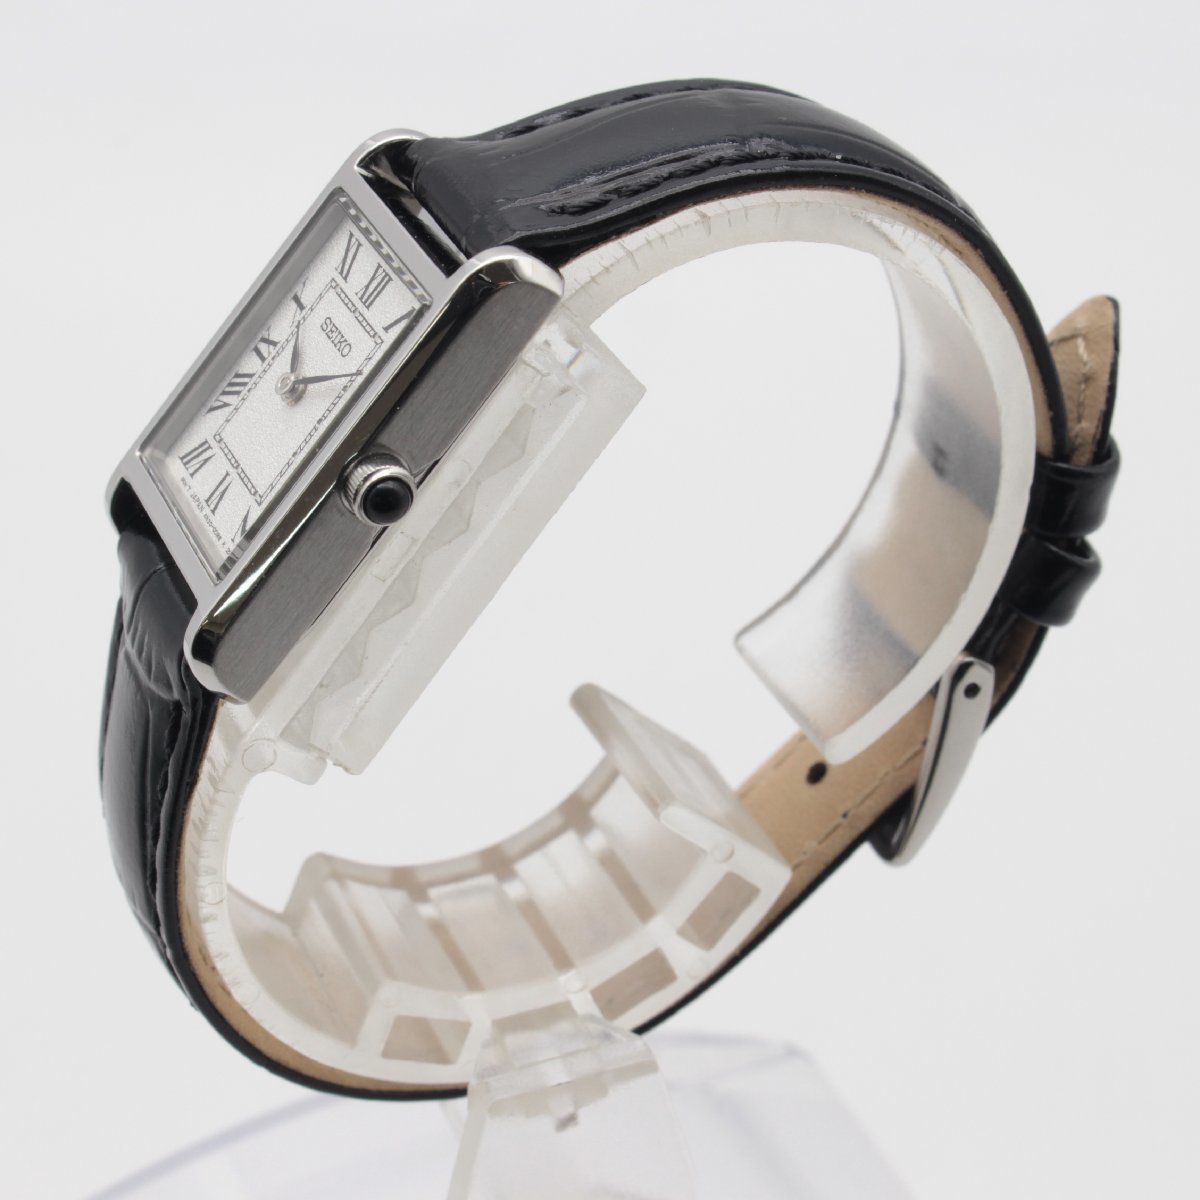 1971▲ SEIKO 腕時計 SELECTION SSEH001 nano・universe Special Edition 落ち着きのあるデザイン 大人の女性 レディース シルバー【0208】_画像2